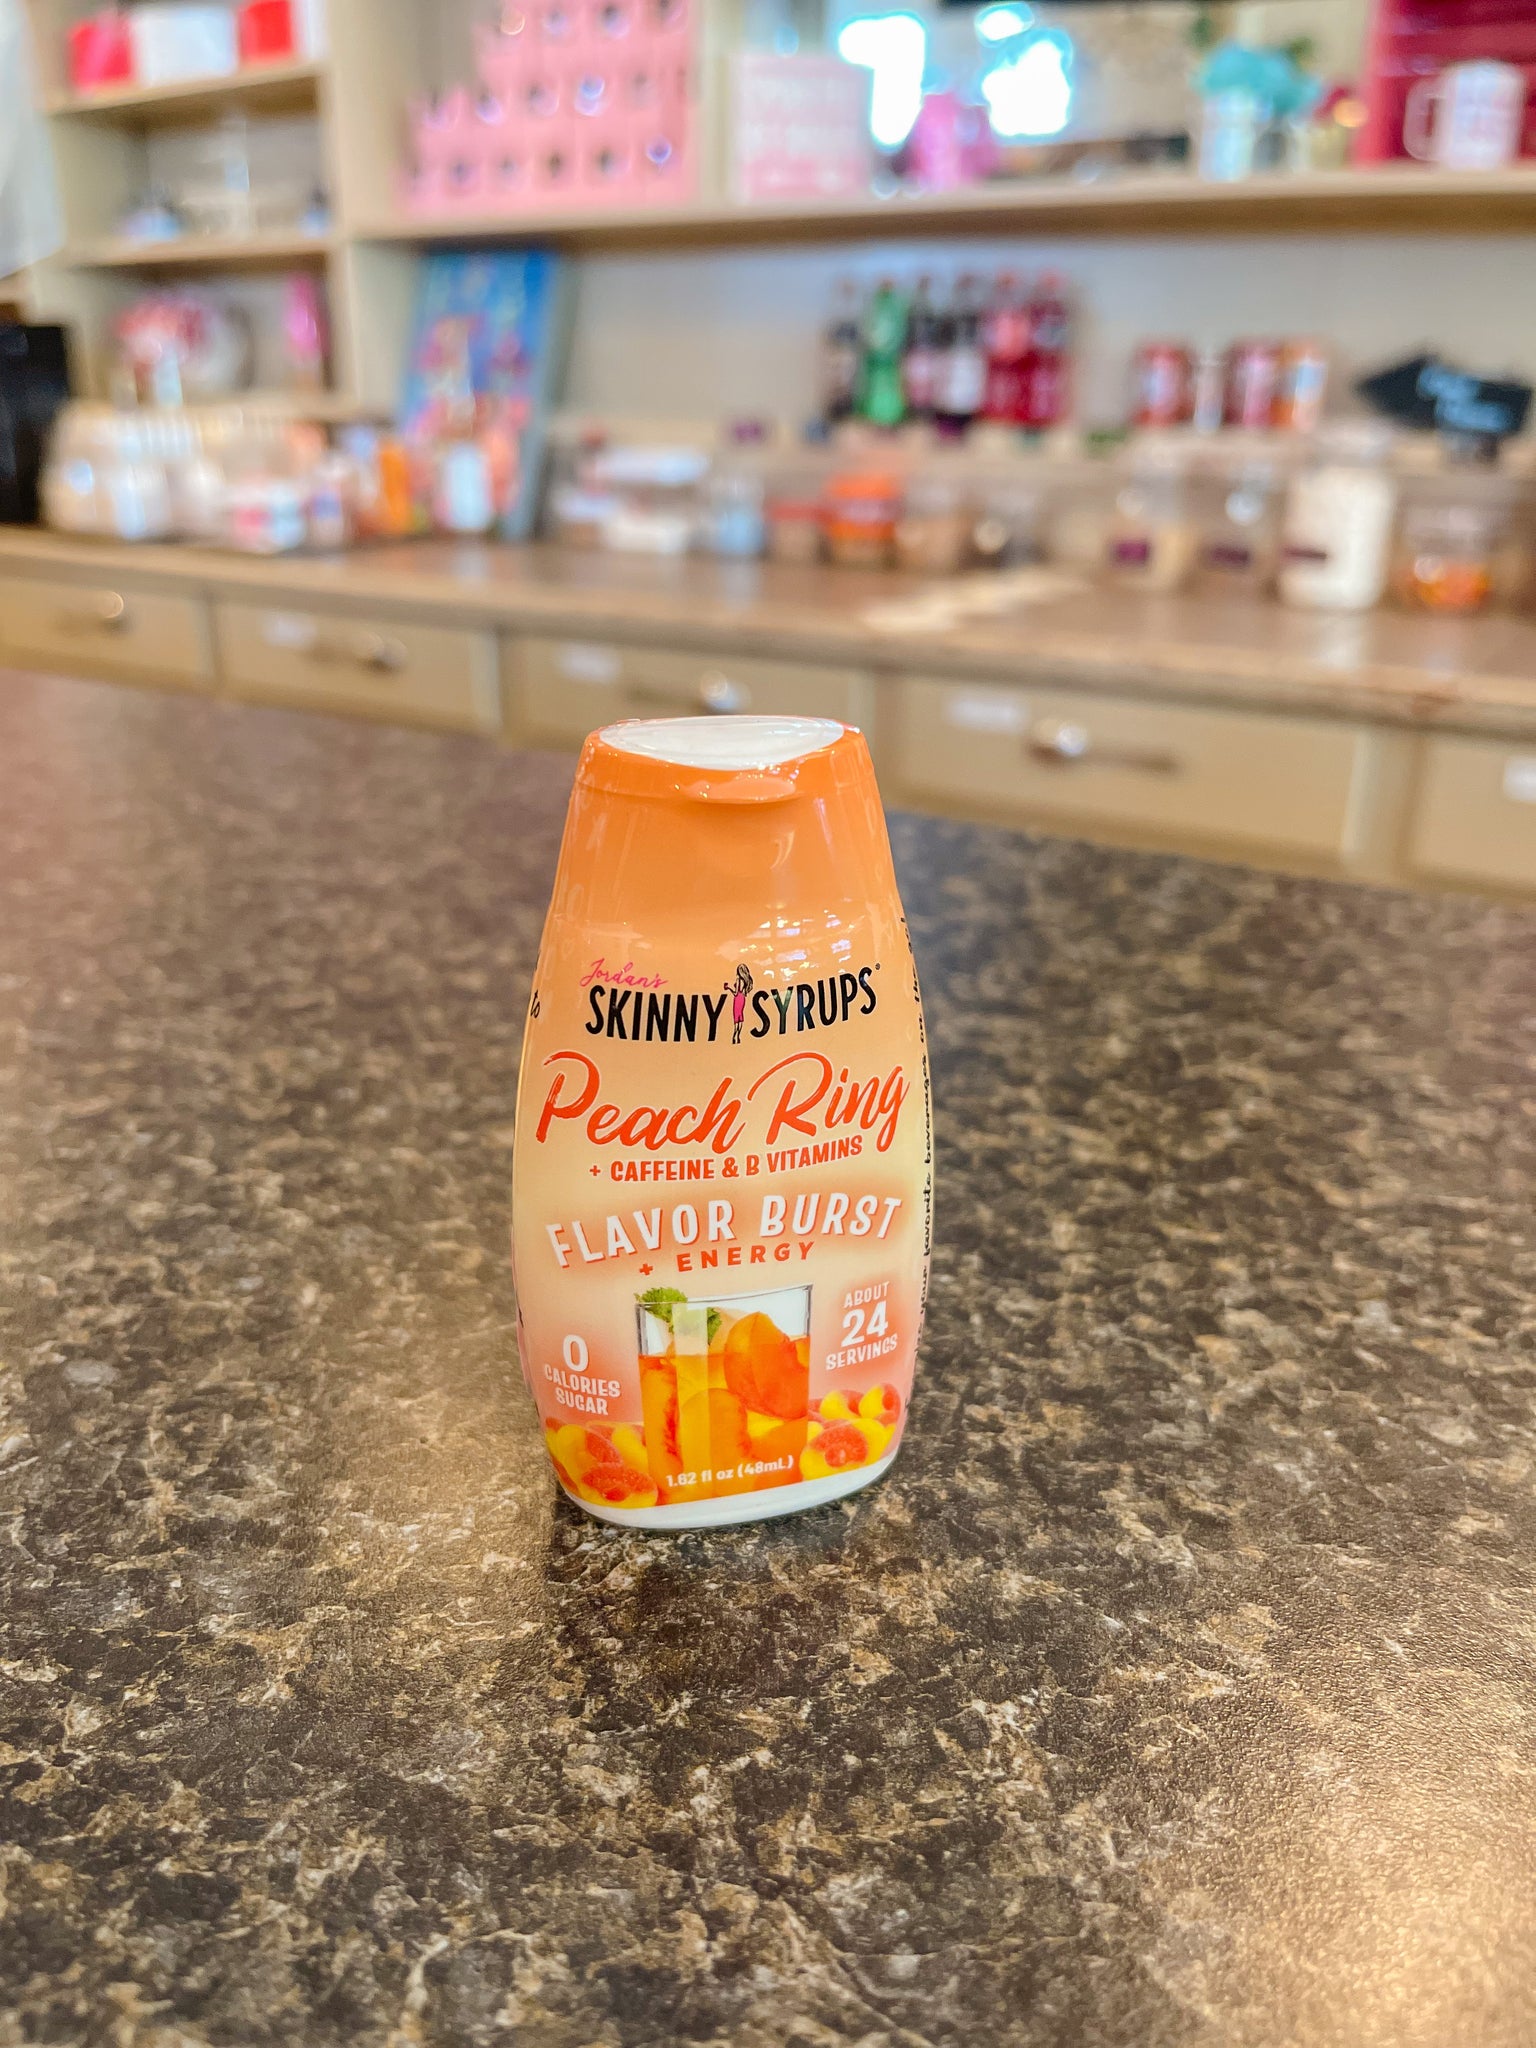 Flavor Burst Drink Mix || Peach Ring + Energy